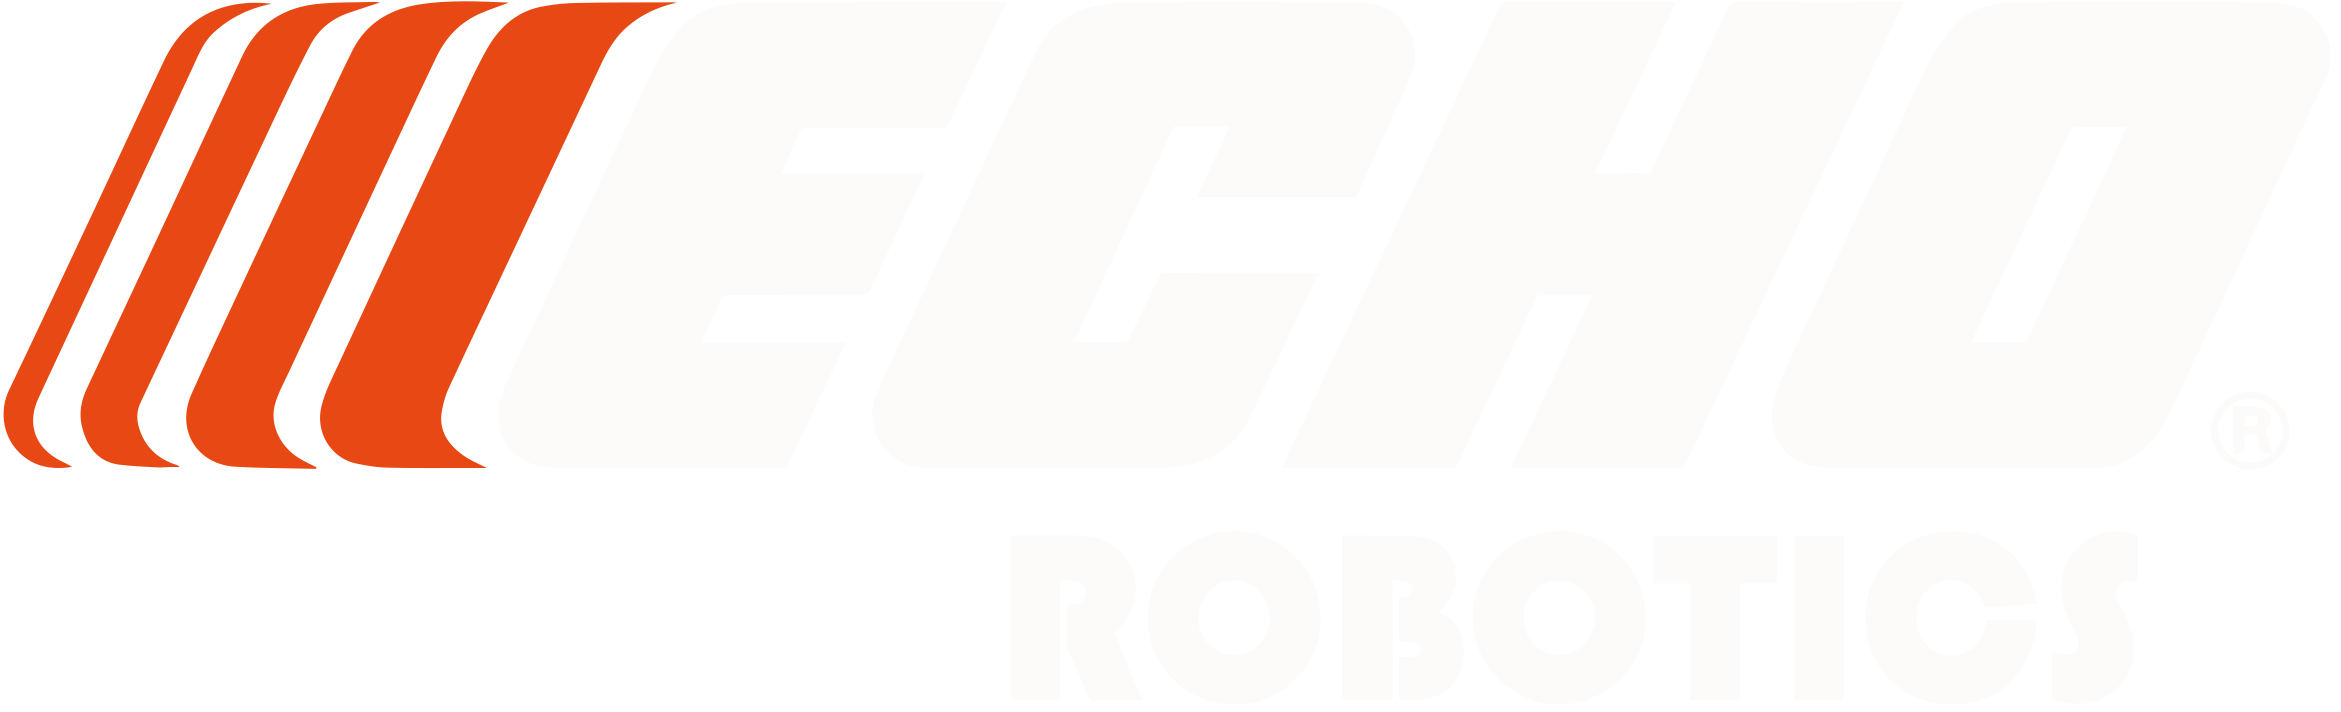 ECHO Robotics Serviceanfrage